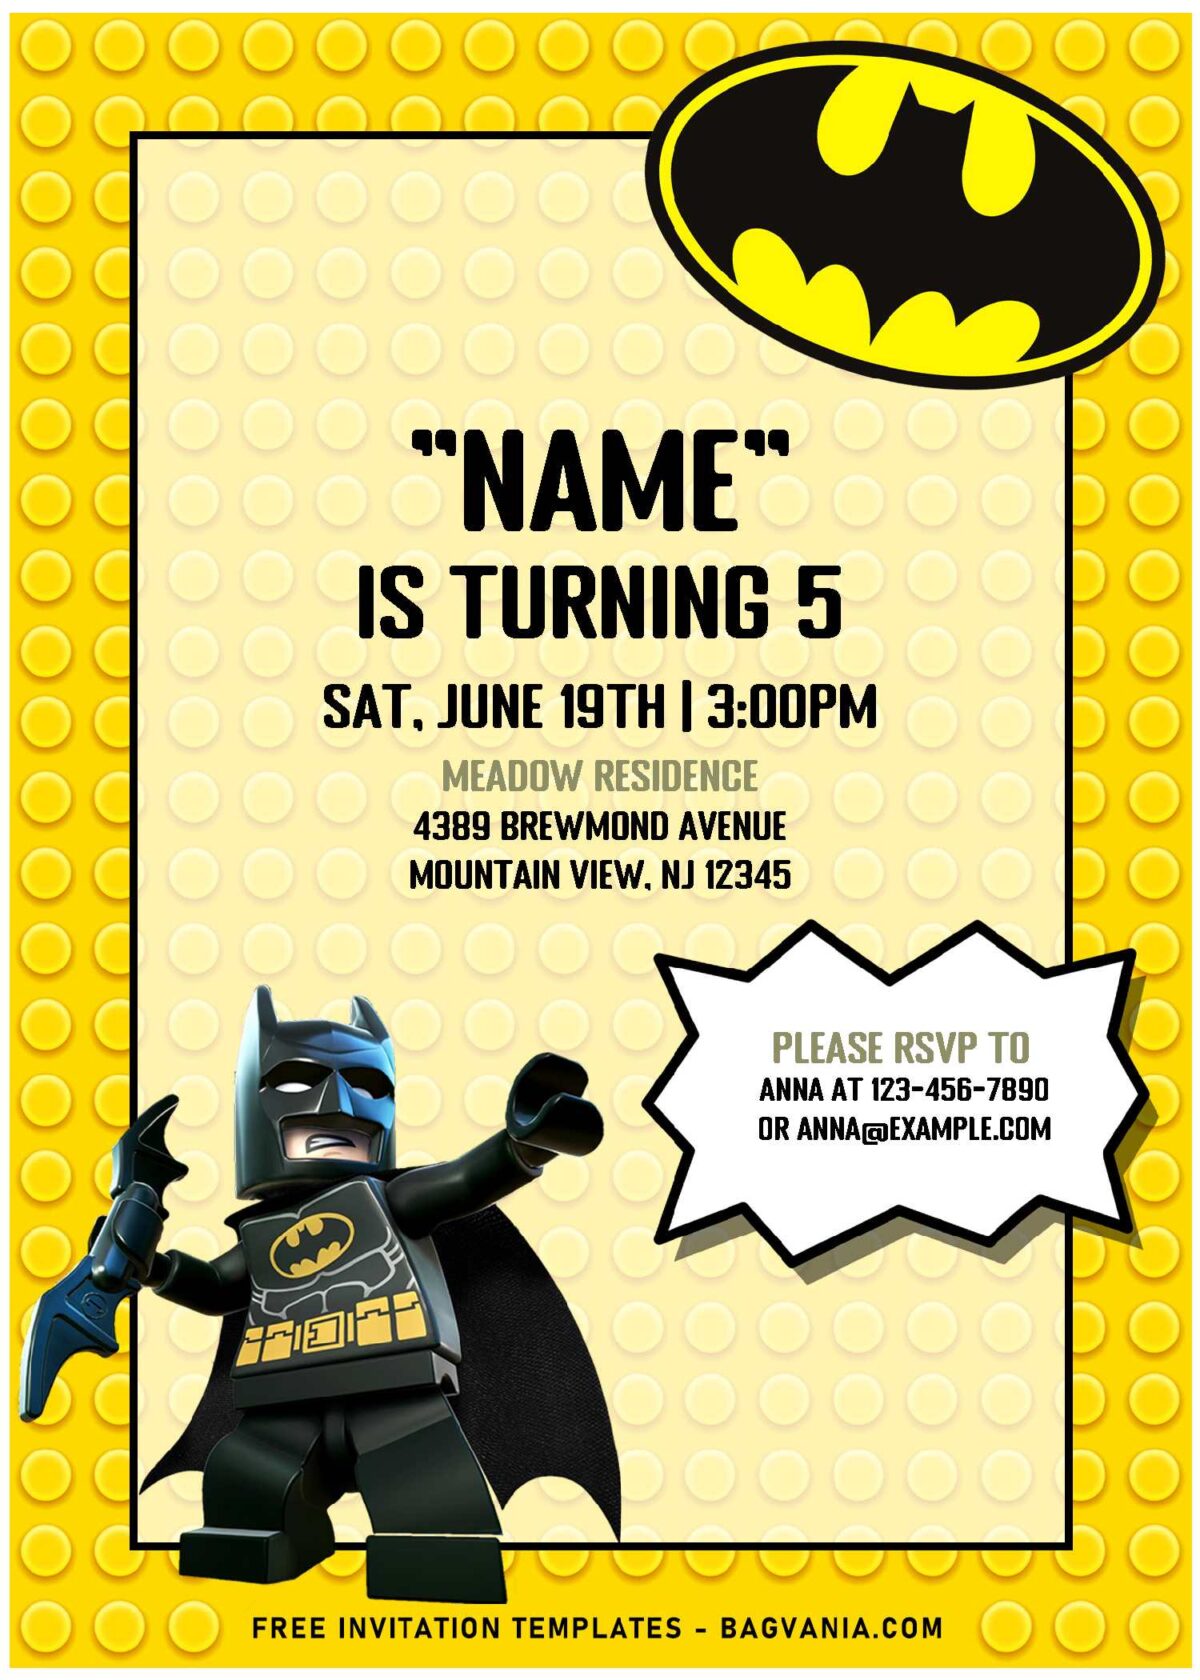 (Free Editable PDF) Super Cool Lego Batman Birthday Invitation Templates with lego Batman throwing Battarang 